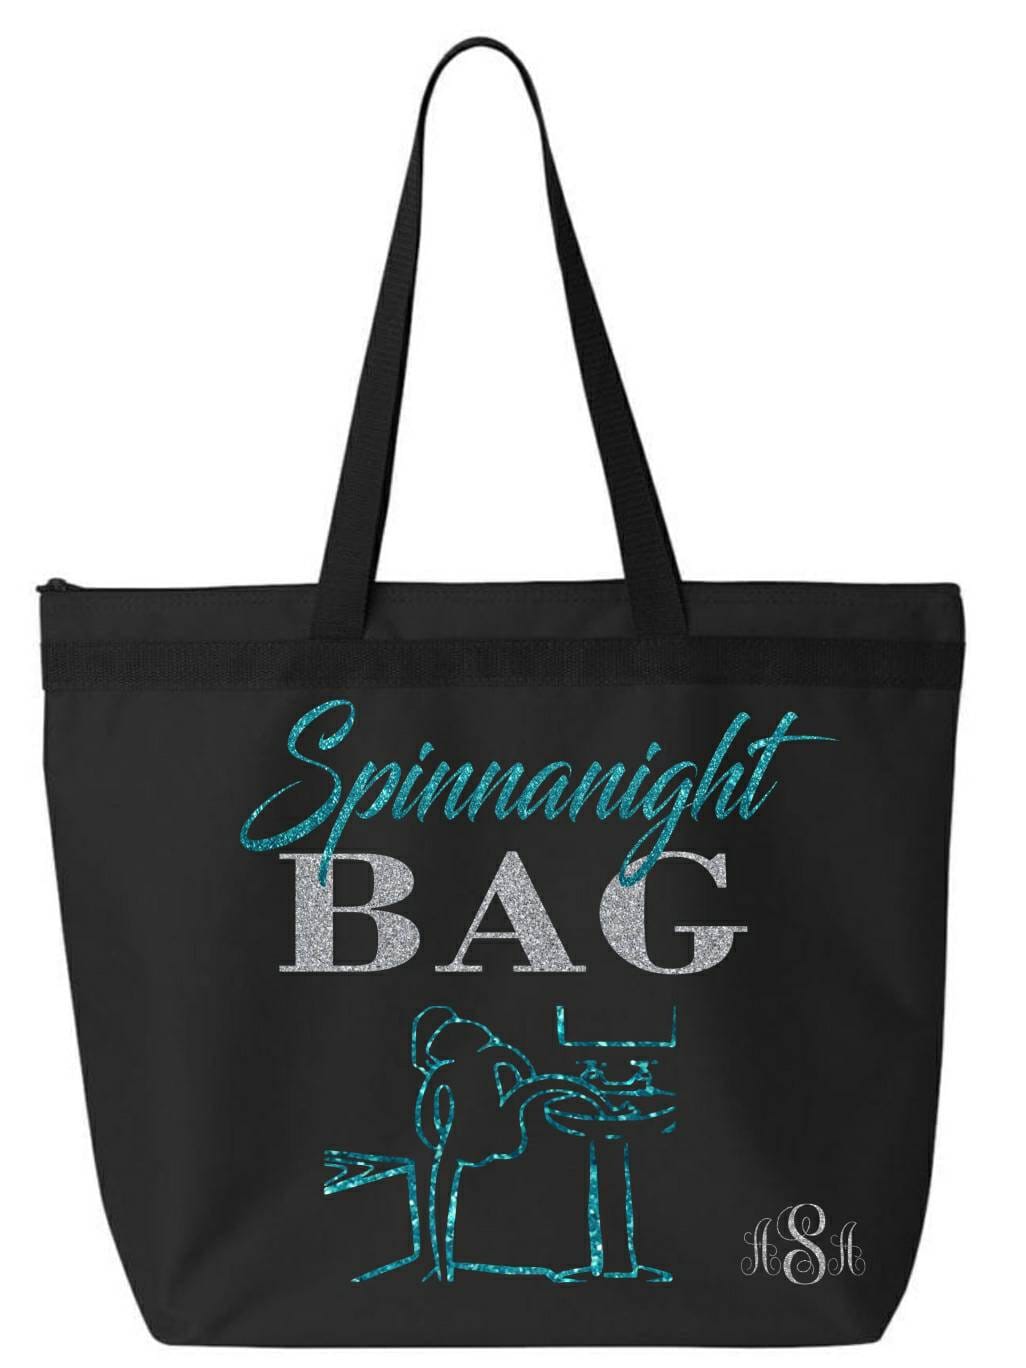 Spend the Night Bag -  Ireland